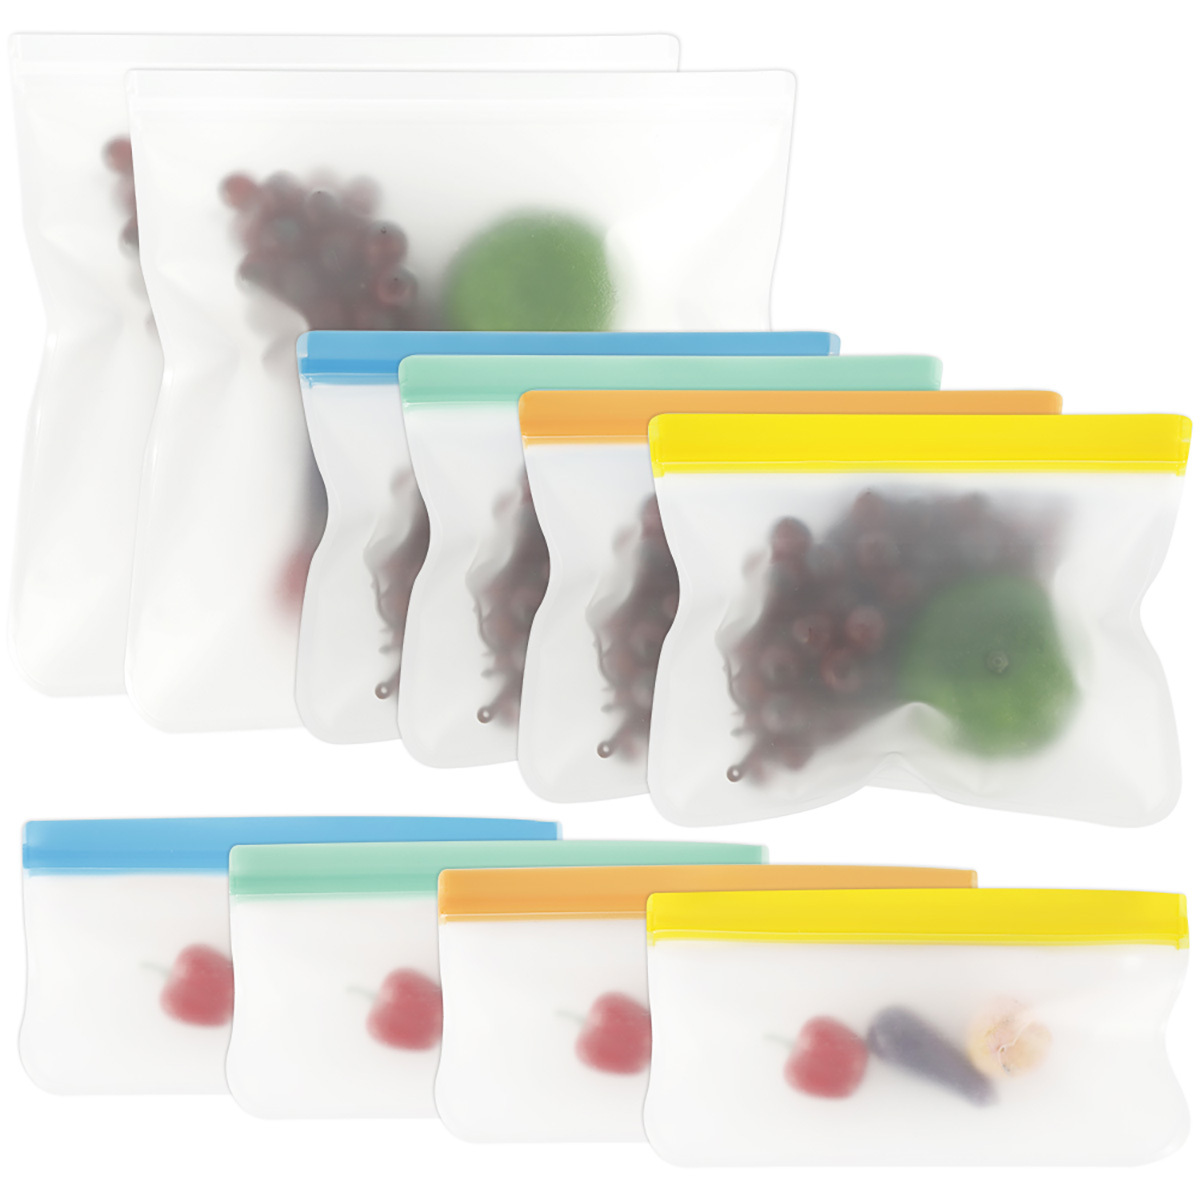 10pcs Plastic Bags For Fruit Packaging, Self-sealing, Resealable